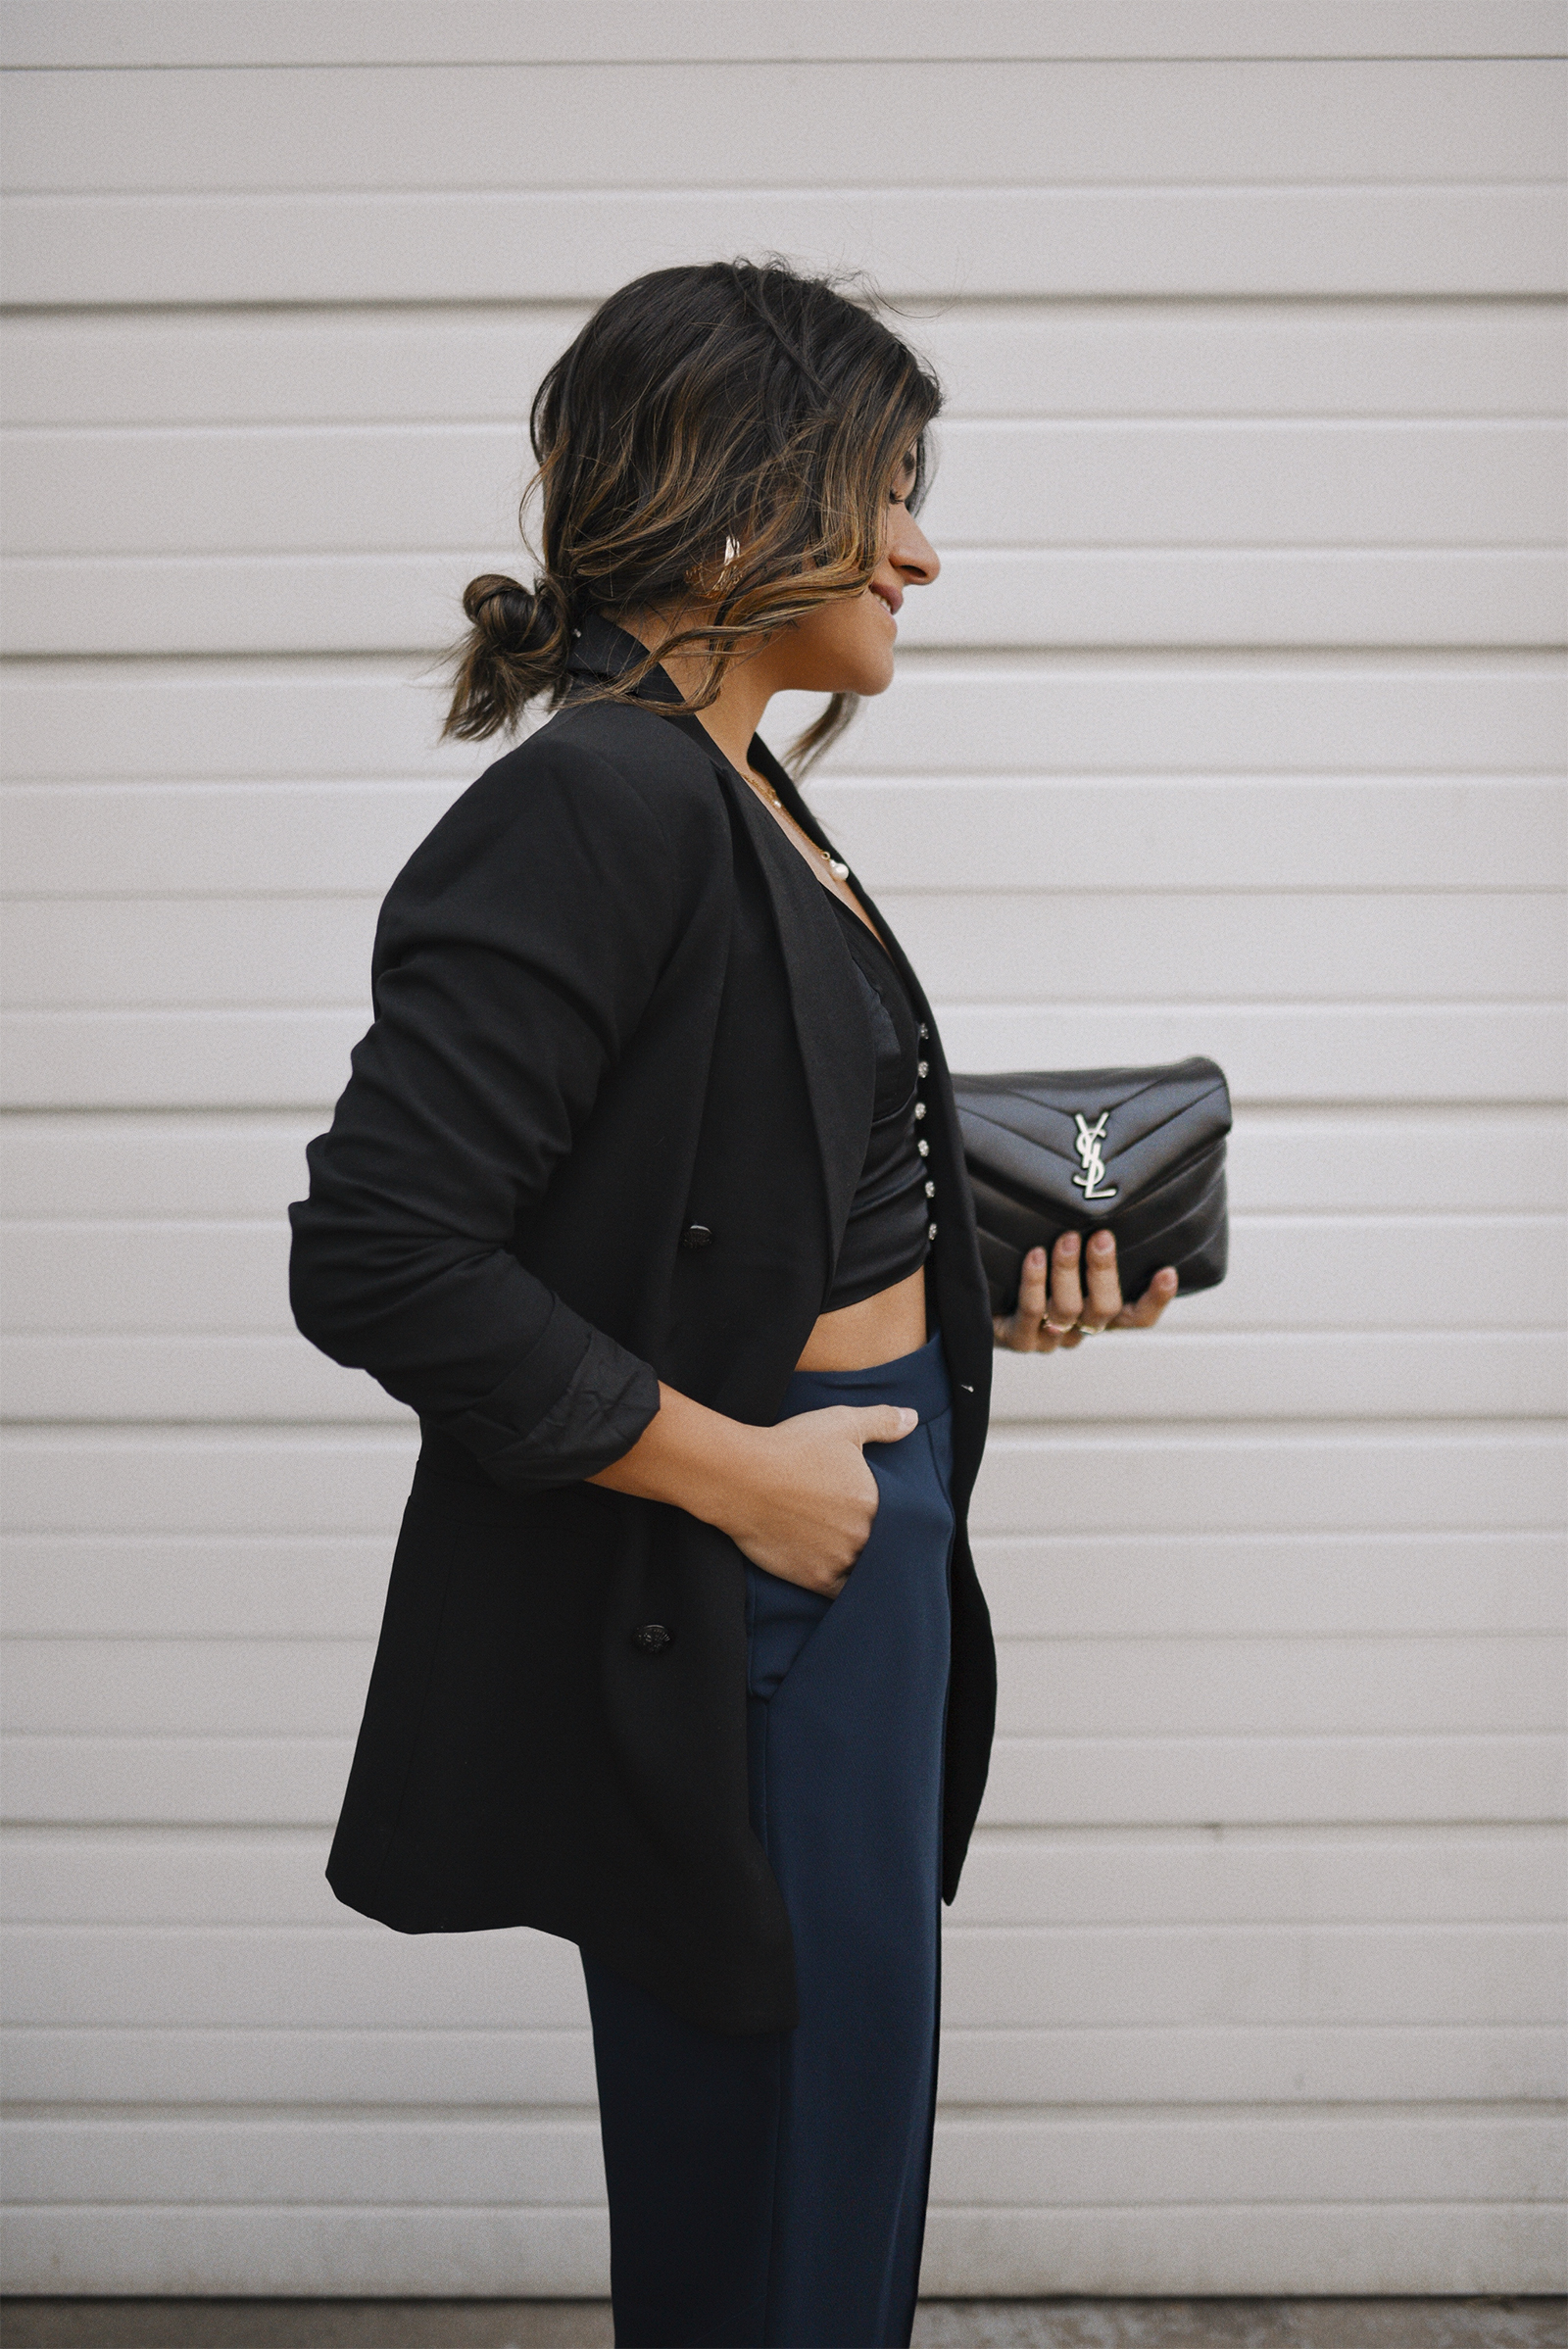 Carolina Hellal of Chic Talk wearing topshop navy blue trousers, Zara black crop top, H&M black blazer and YSL black crossbody bag. 